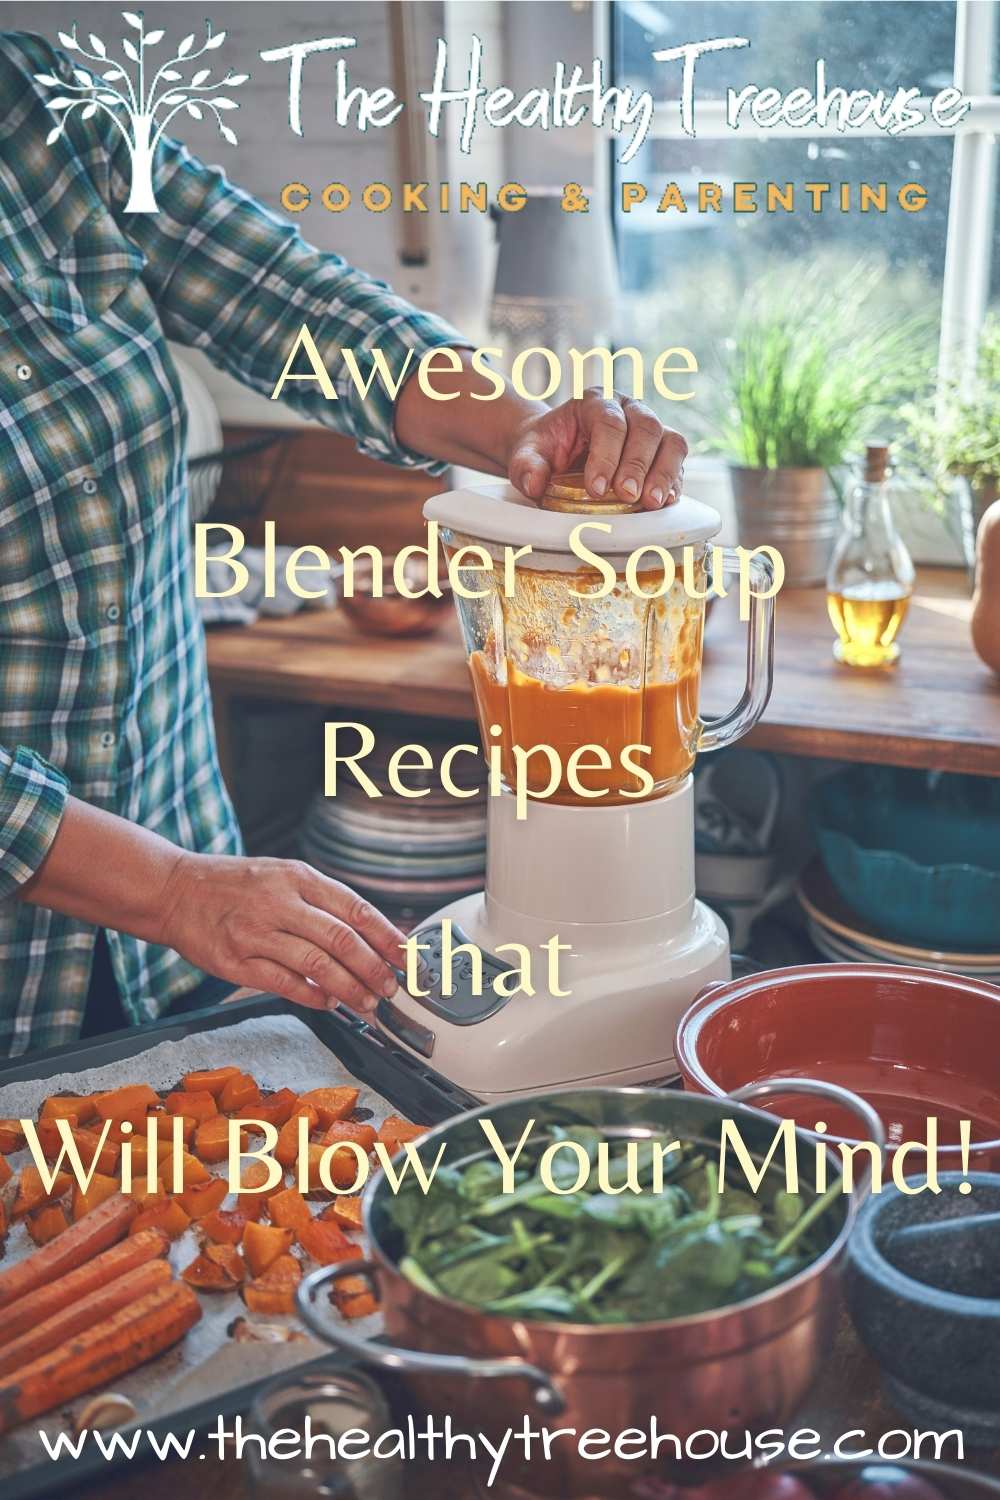 blendtec blender soup recipes